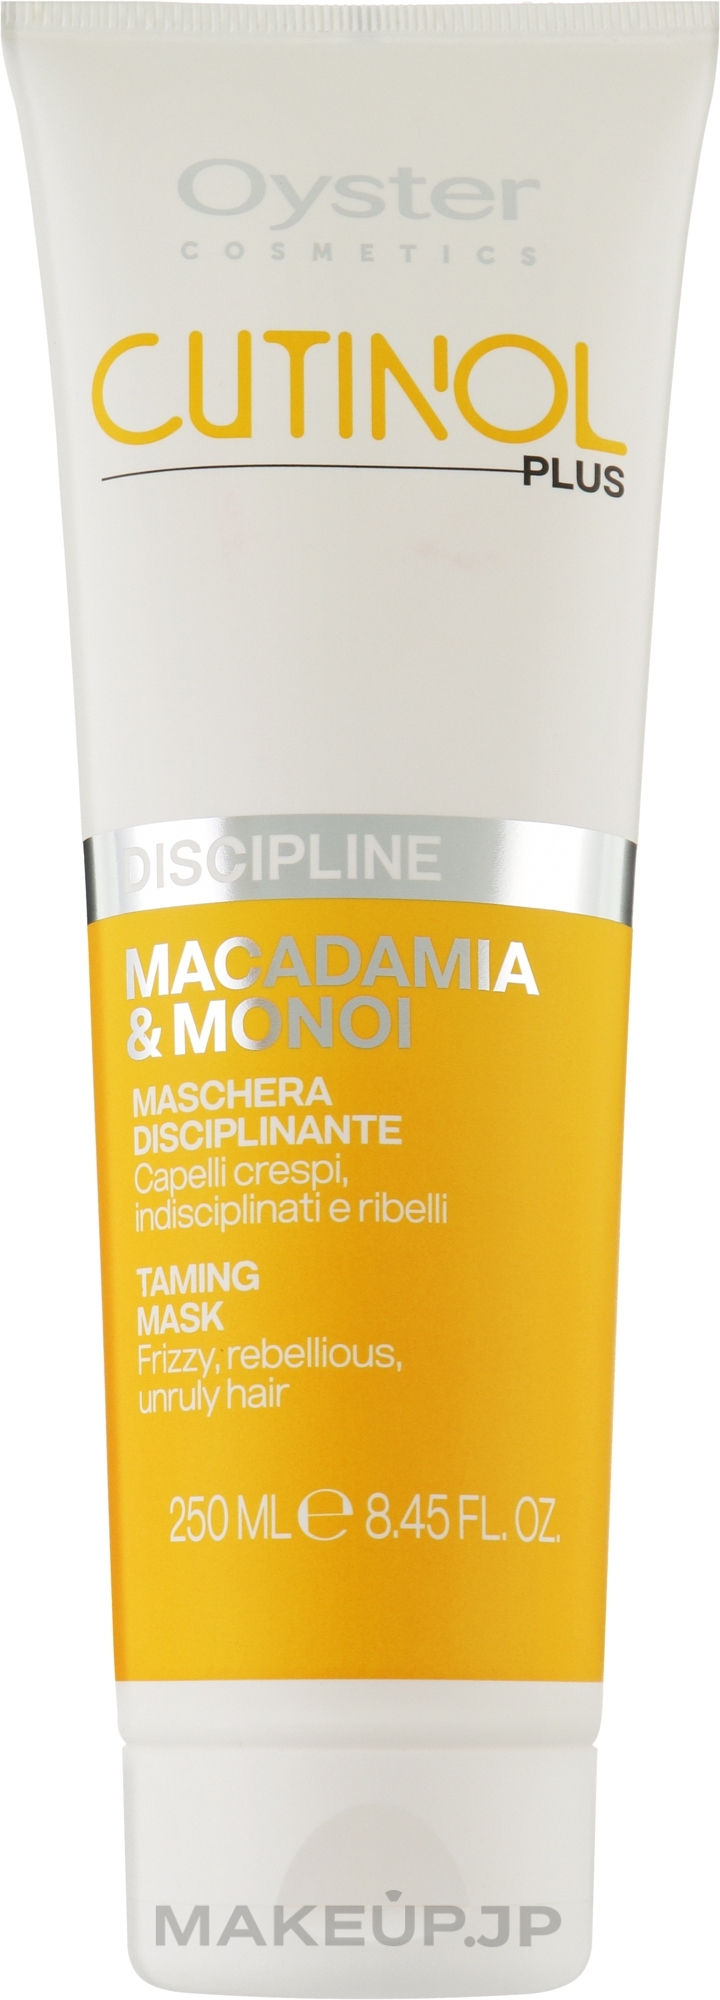 Unruly Hair Mask - Oyster Cutinol Plus Macadamia & Monoi Oil Discipline Mask — photo 250 ml